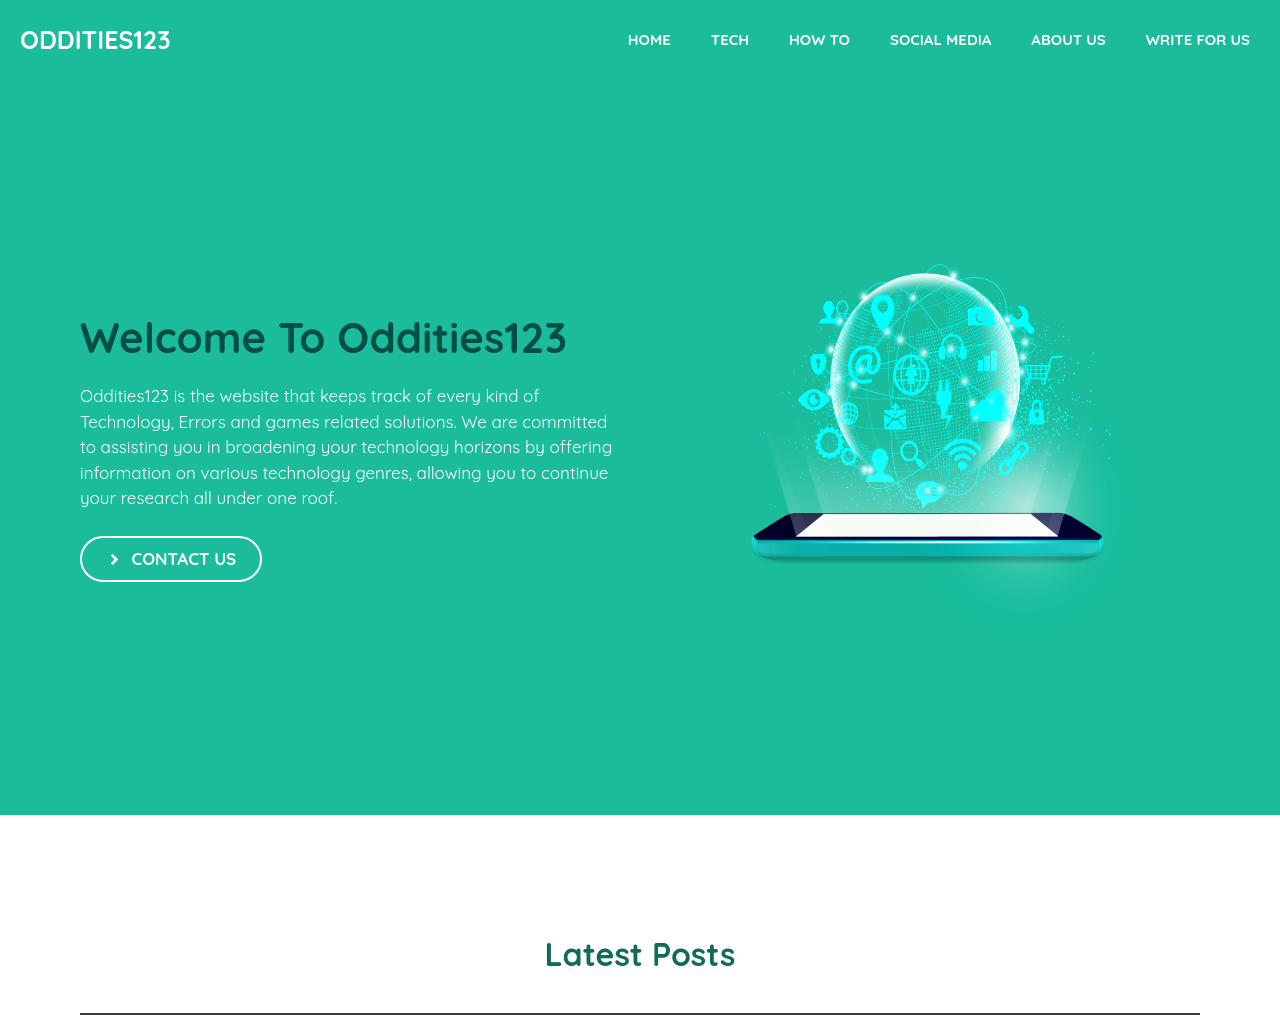 oddities123.com